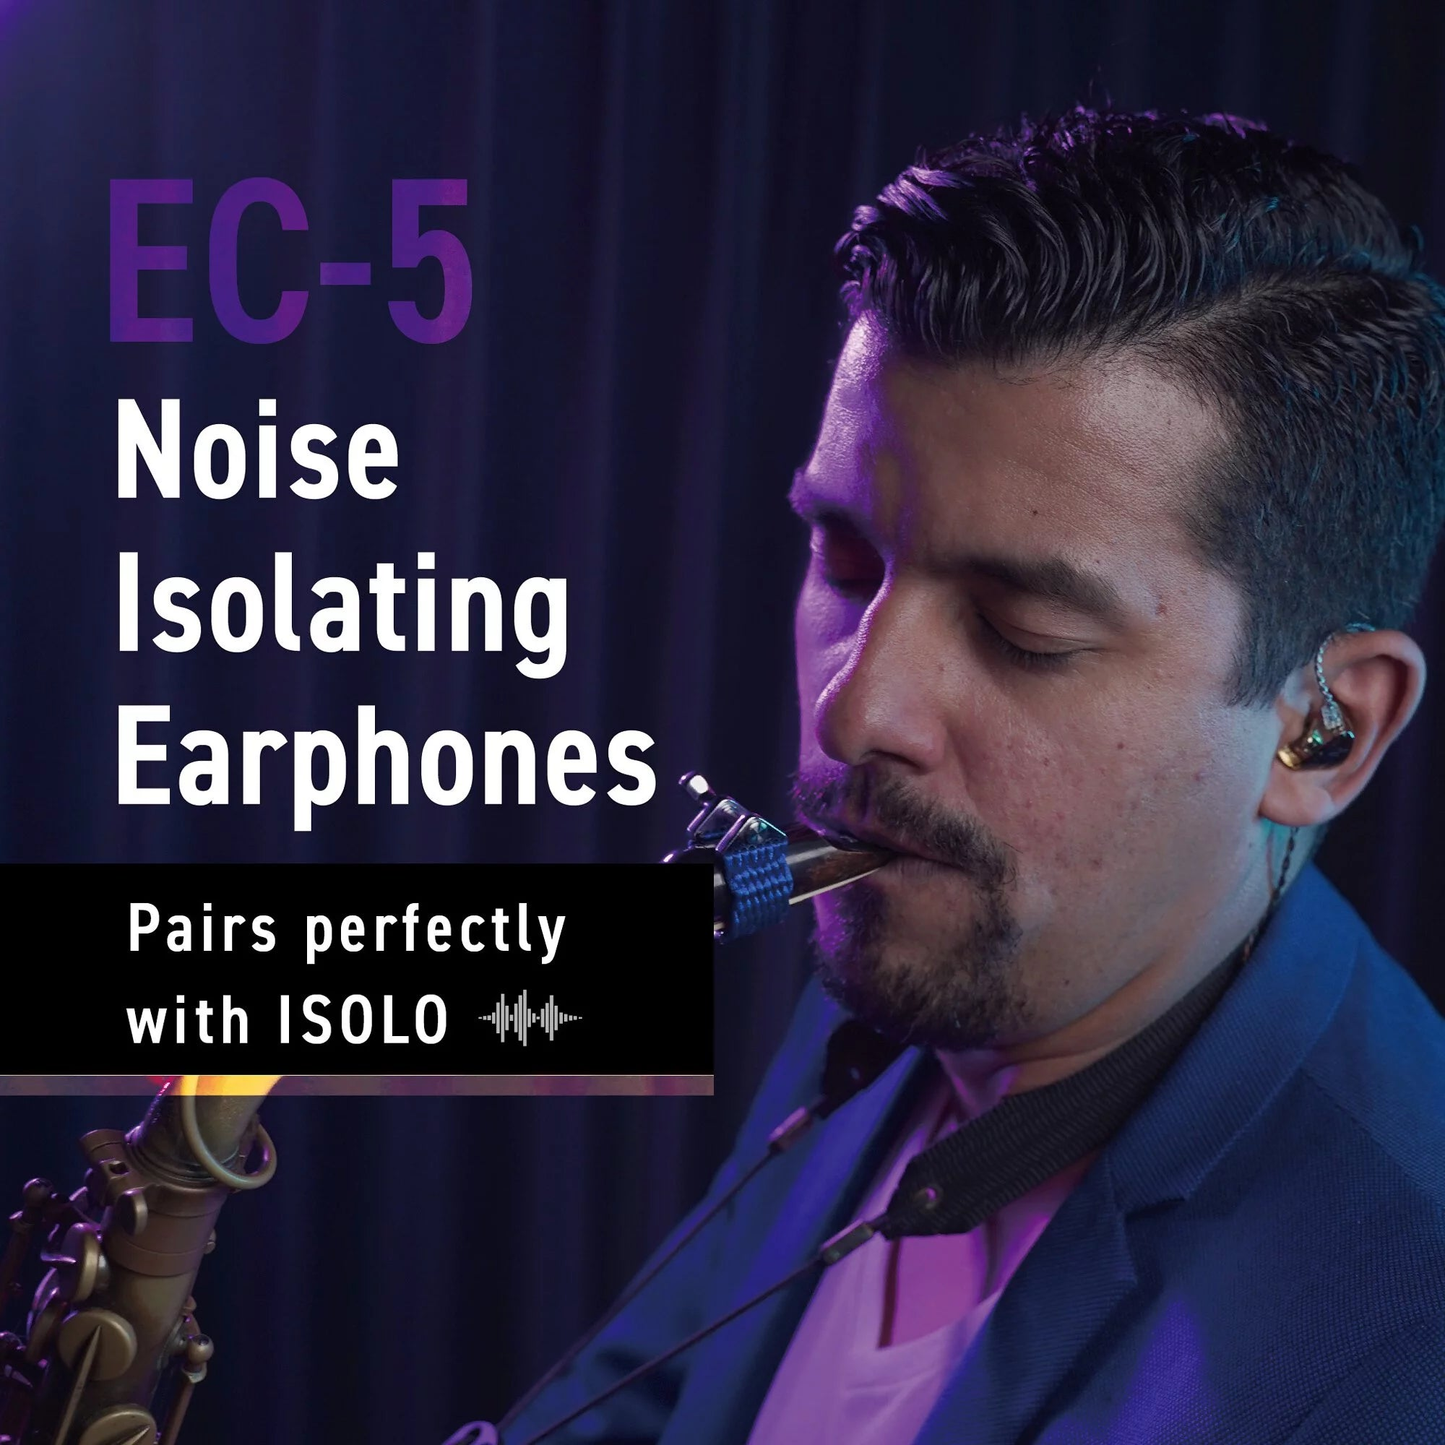 EC-5 Noise Isolating Earphones